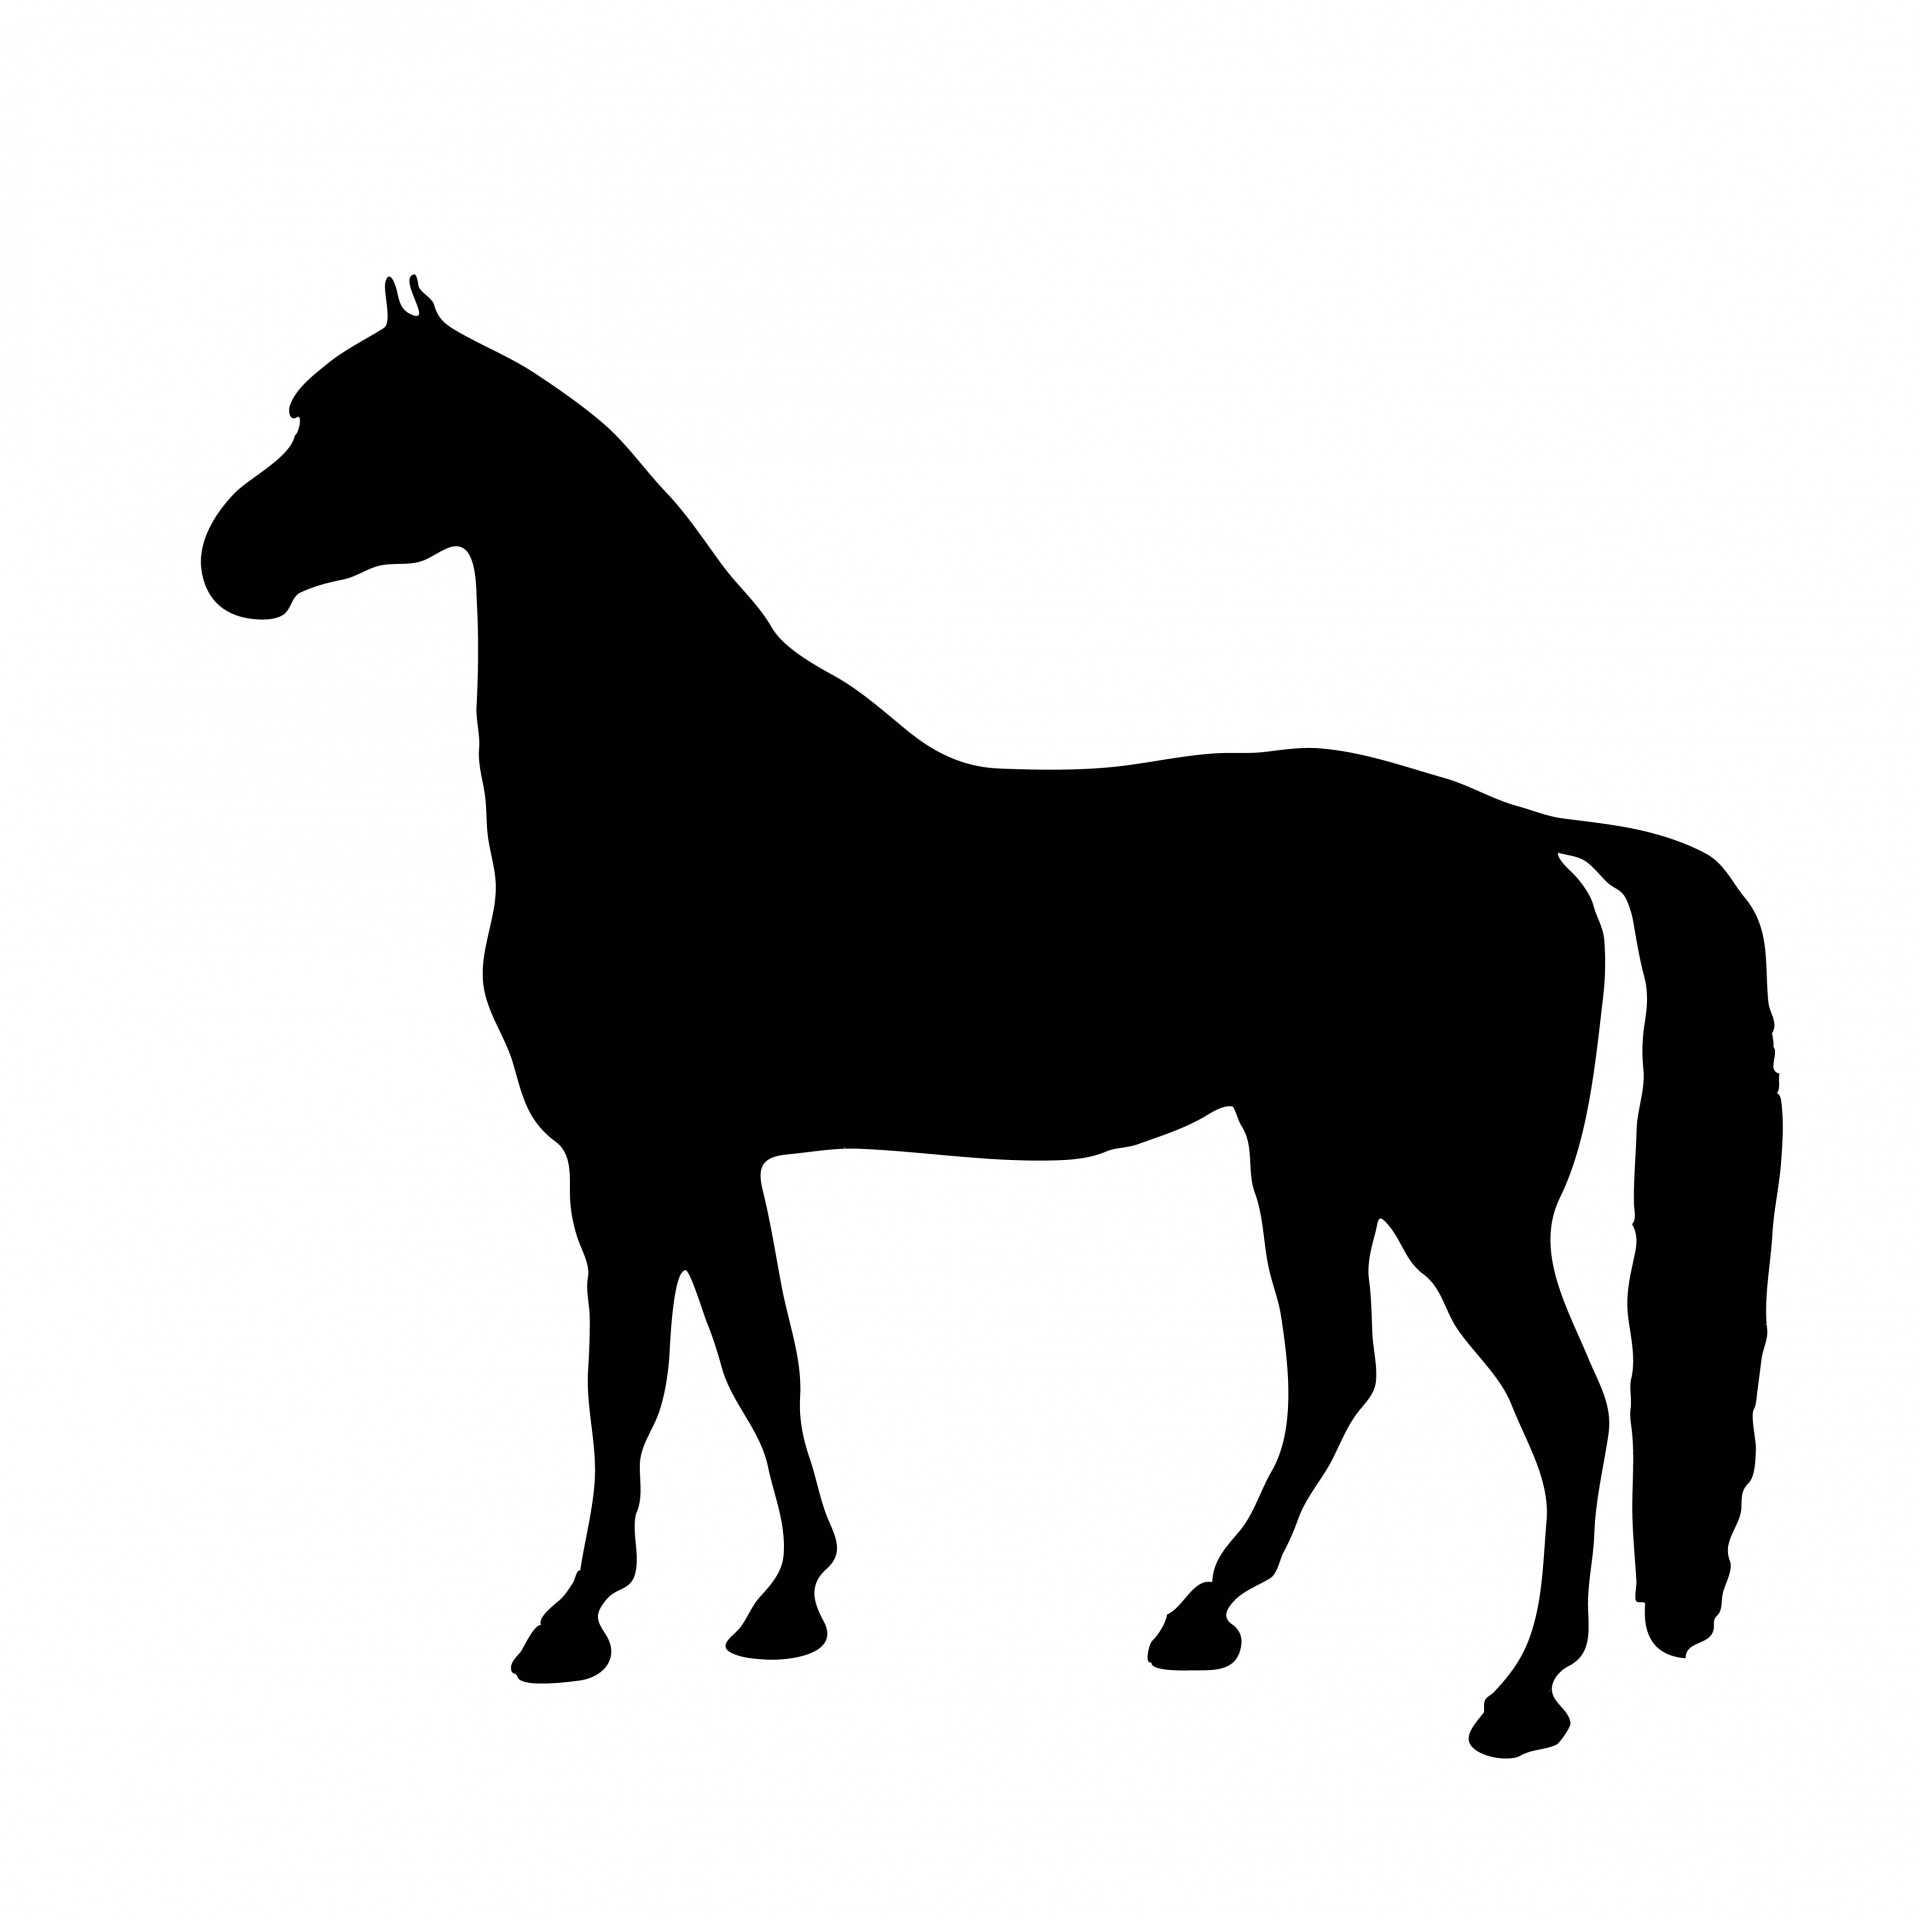 Black Horse Silhouette Images - Public Domain Pictures - Page 1